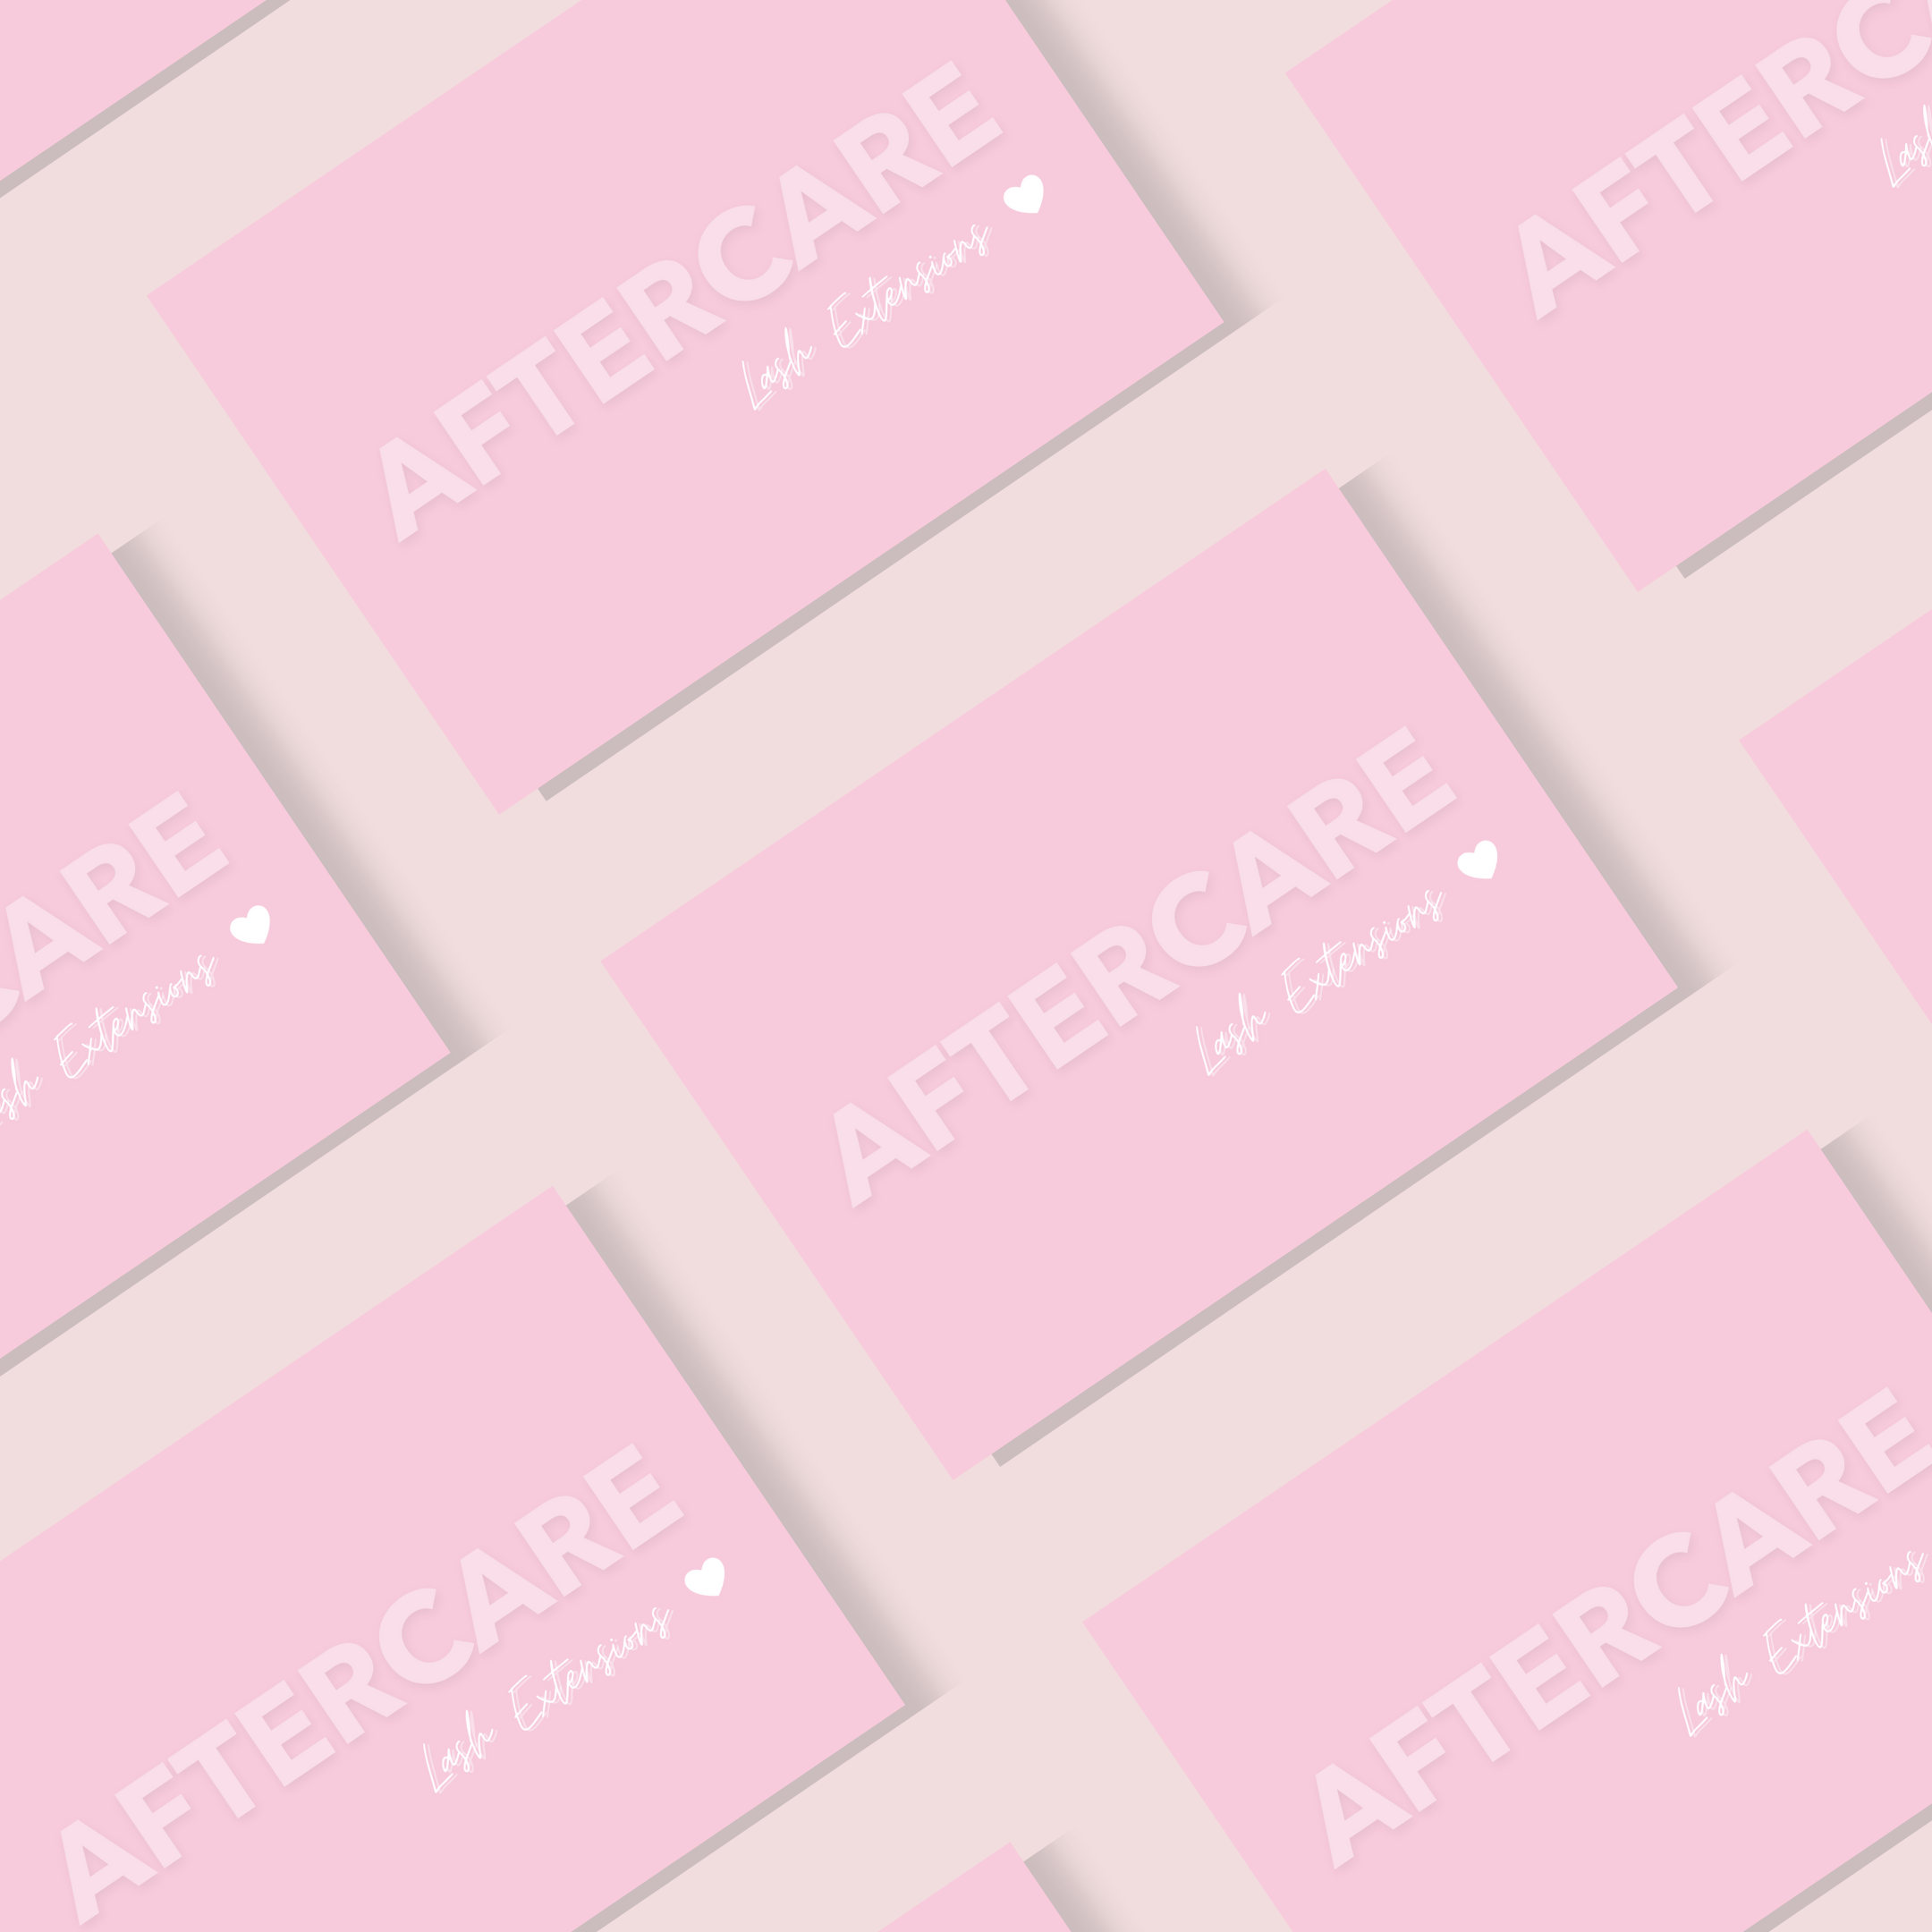 Editable Lash Aftercare Card Template